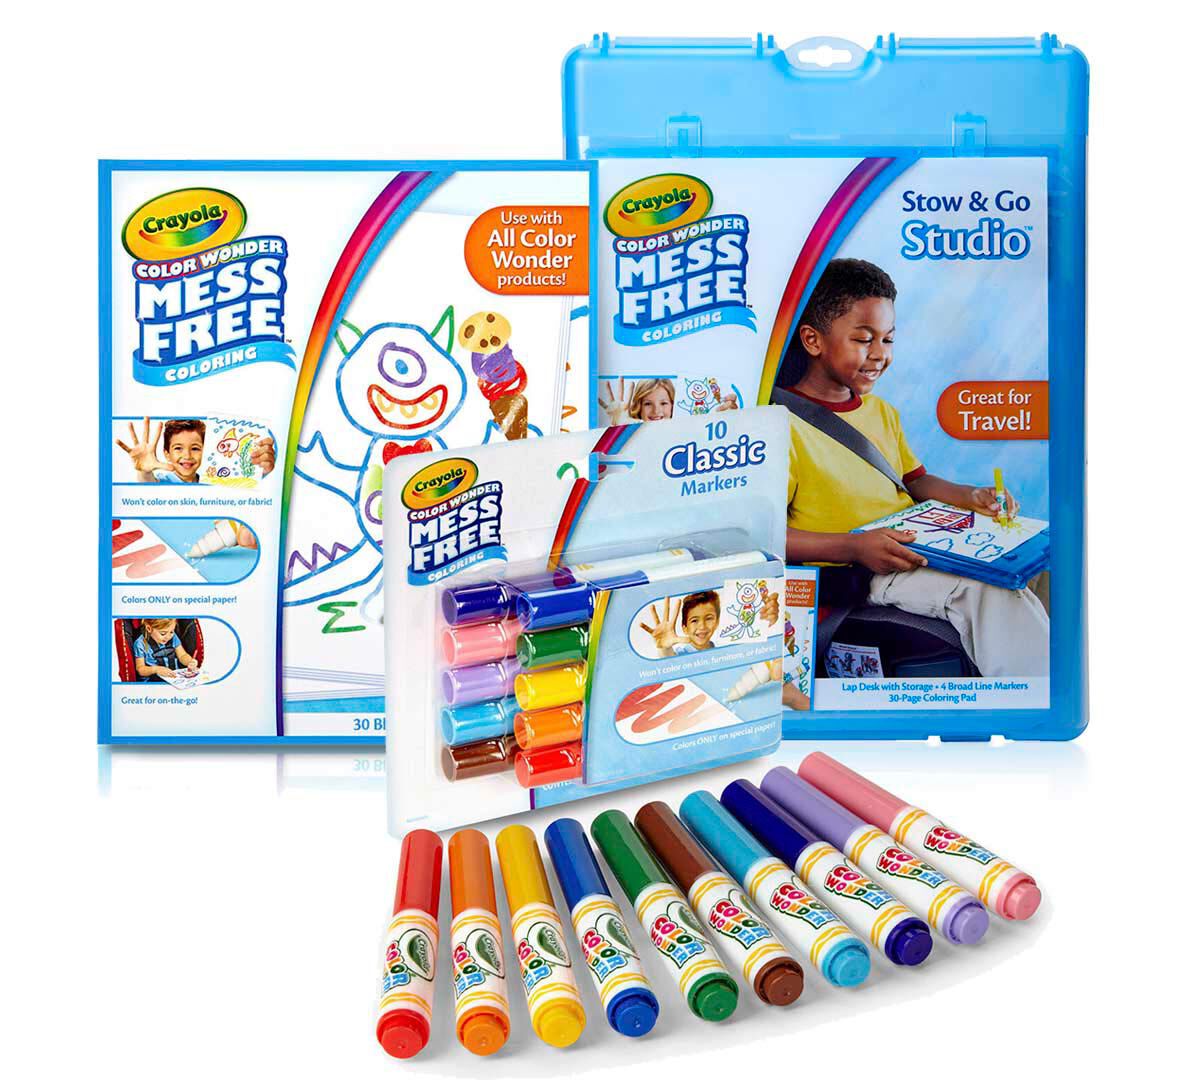 Crayola Colour Wonder Crayons Sticker Packs Pens Pencils Craft Stationary New 